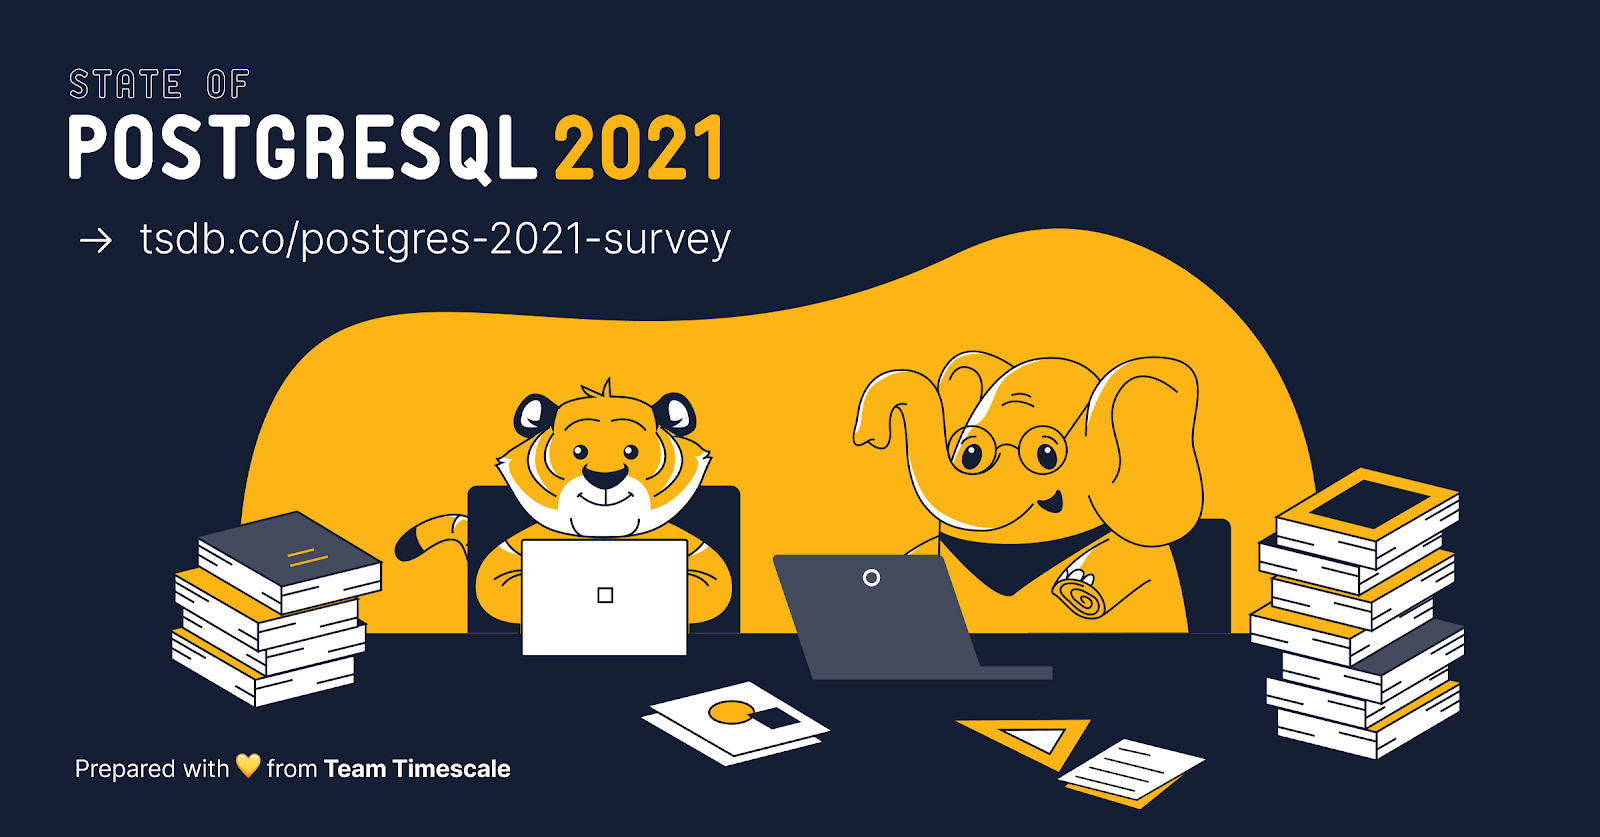 State of PostgreSQL 2021 Survey graphic with shortlink